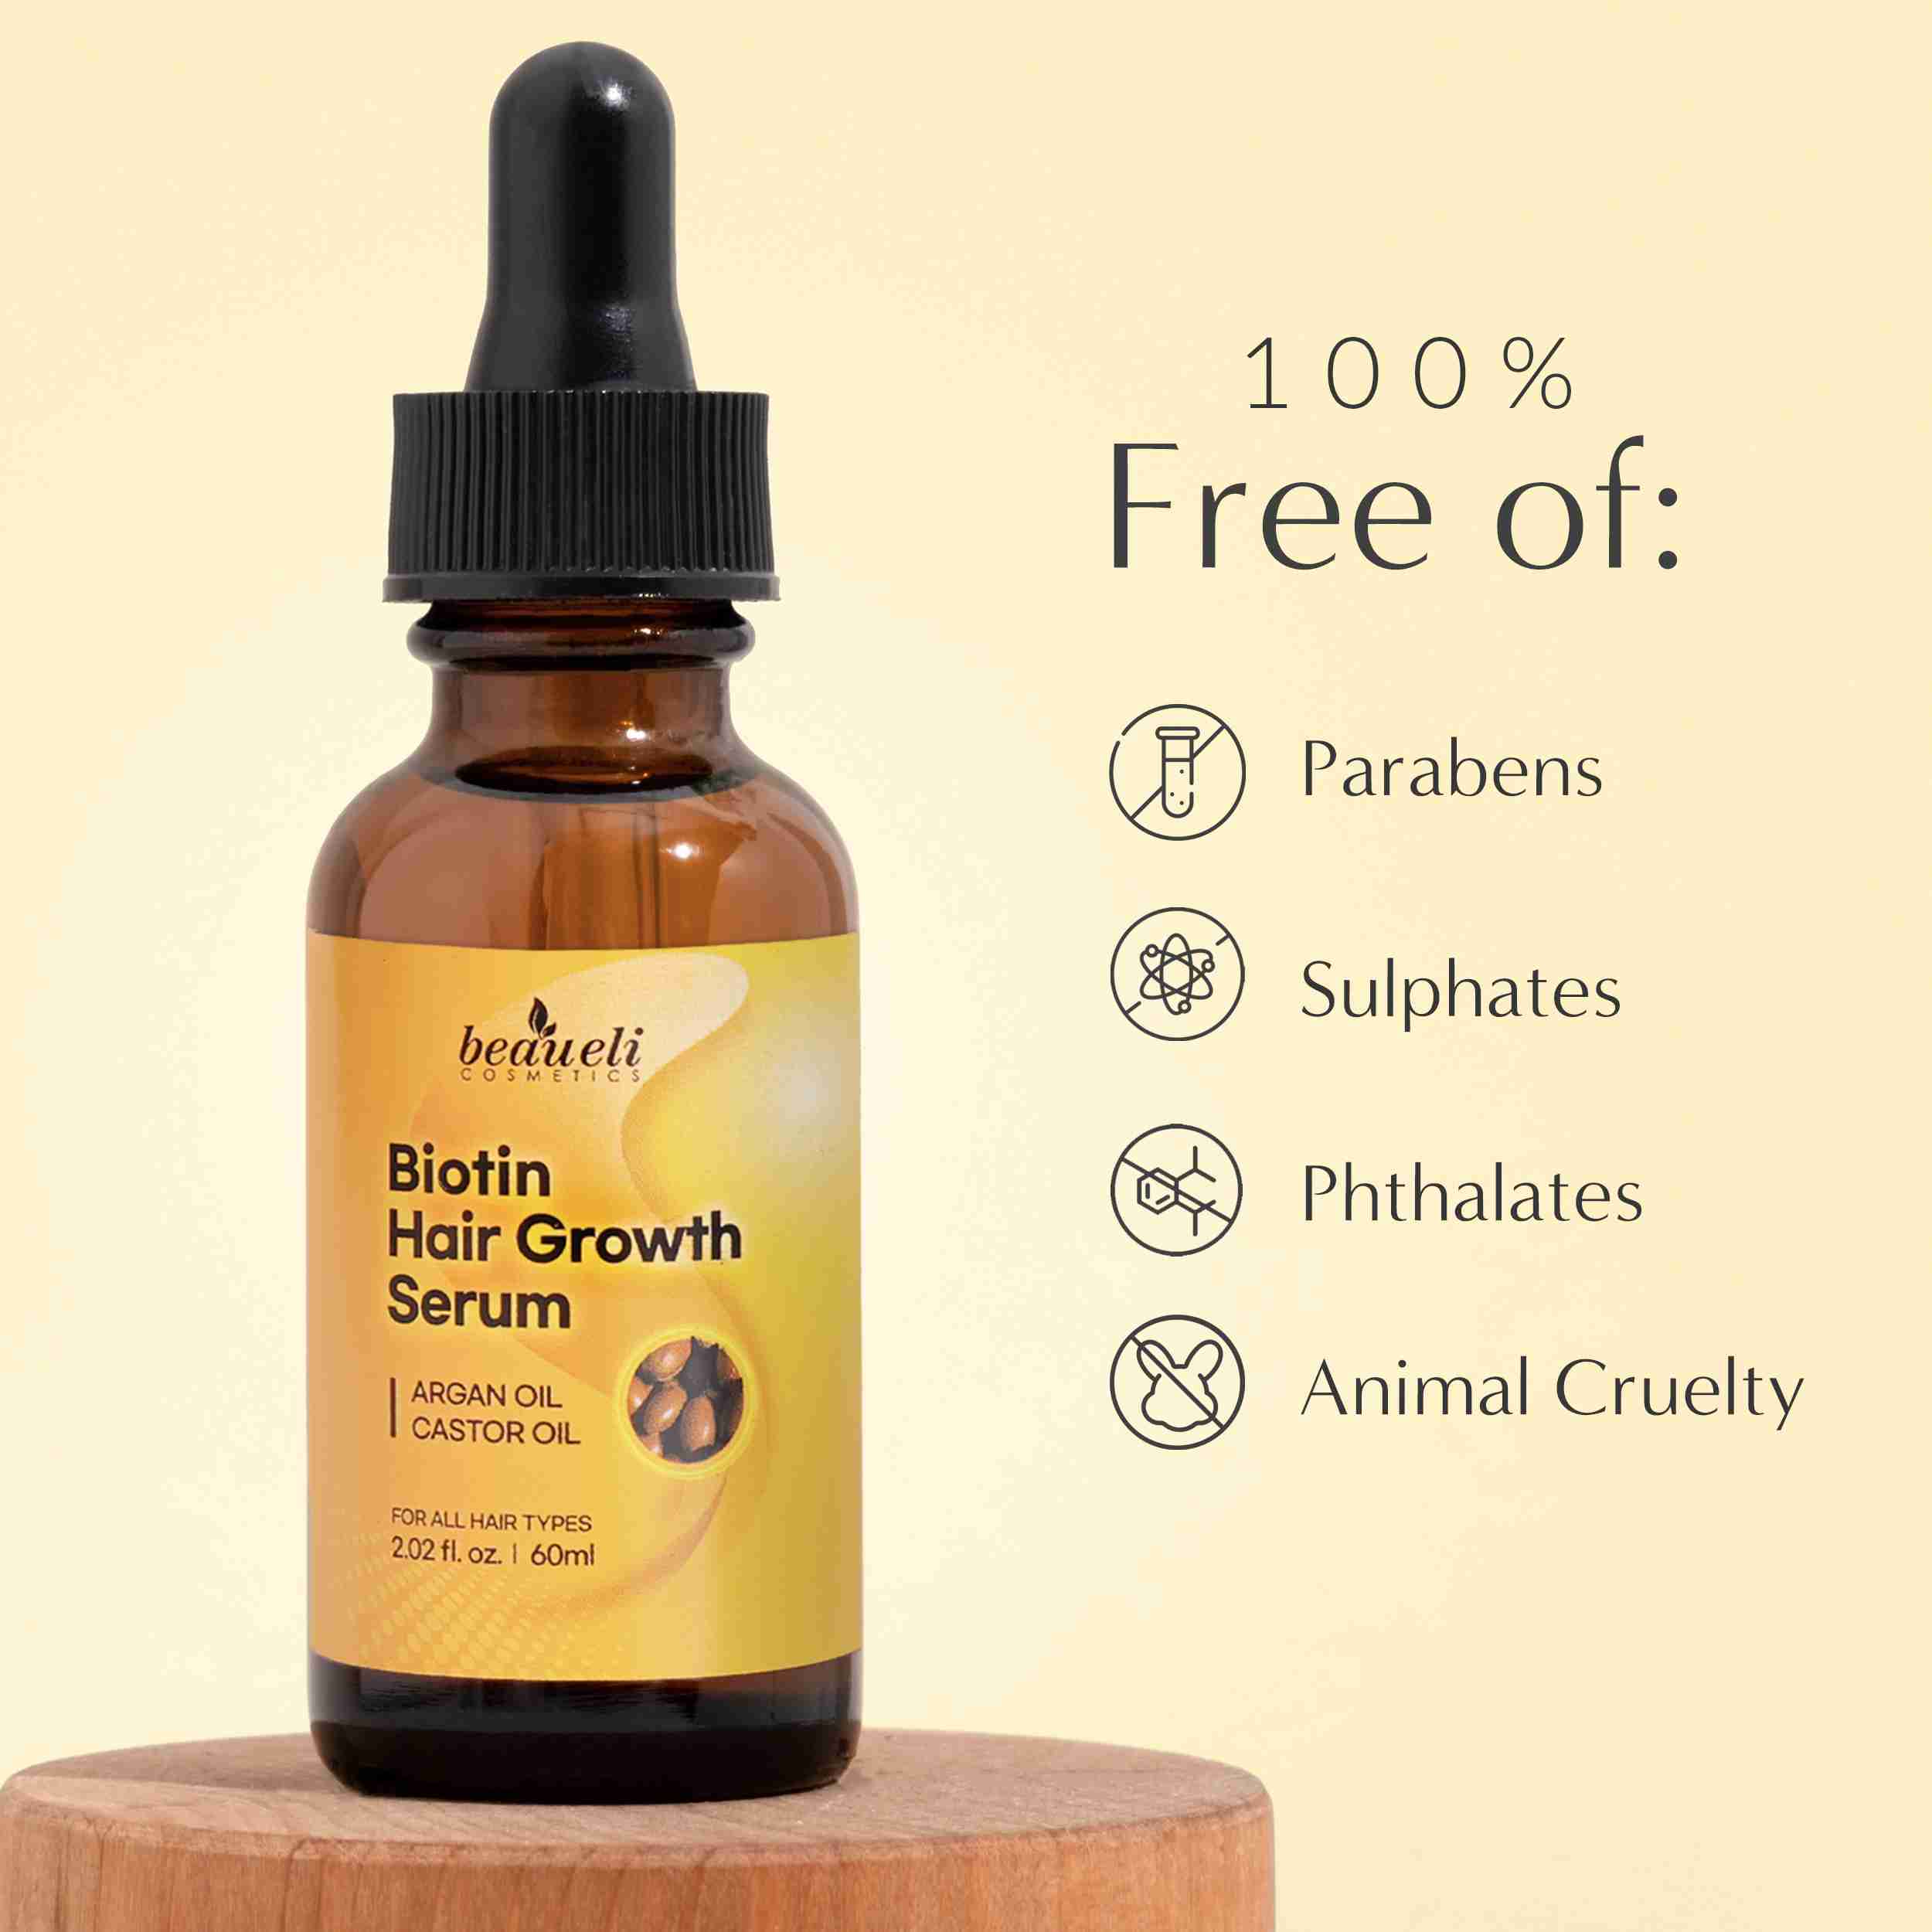 biotin-hair-growth-serum with discount code